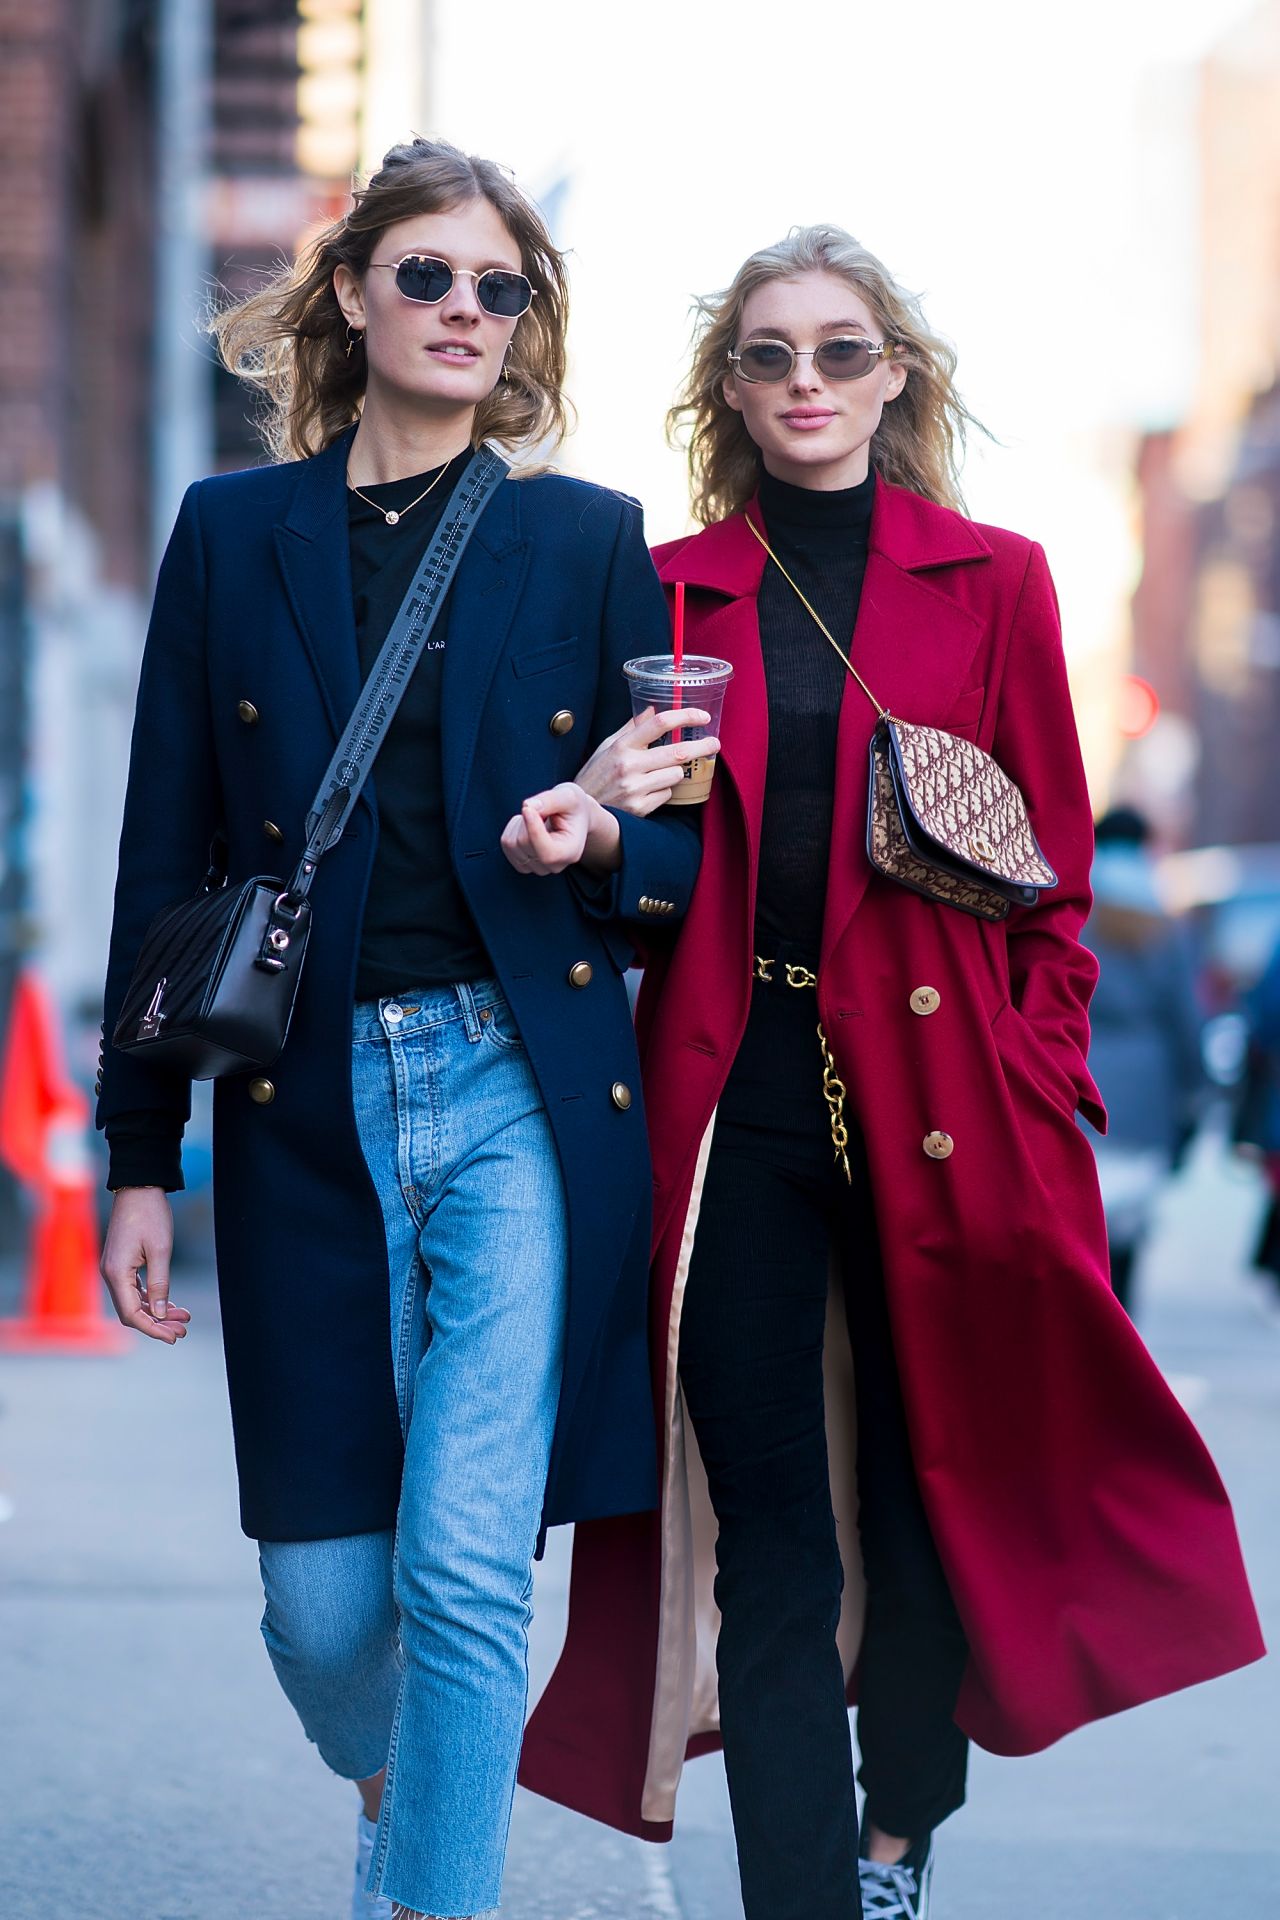 Elsa Hosk and Constance Jablonski Street Fashion - NoHo, NYC 03/31/2018 ...